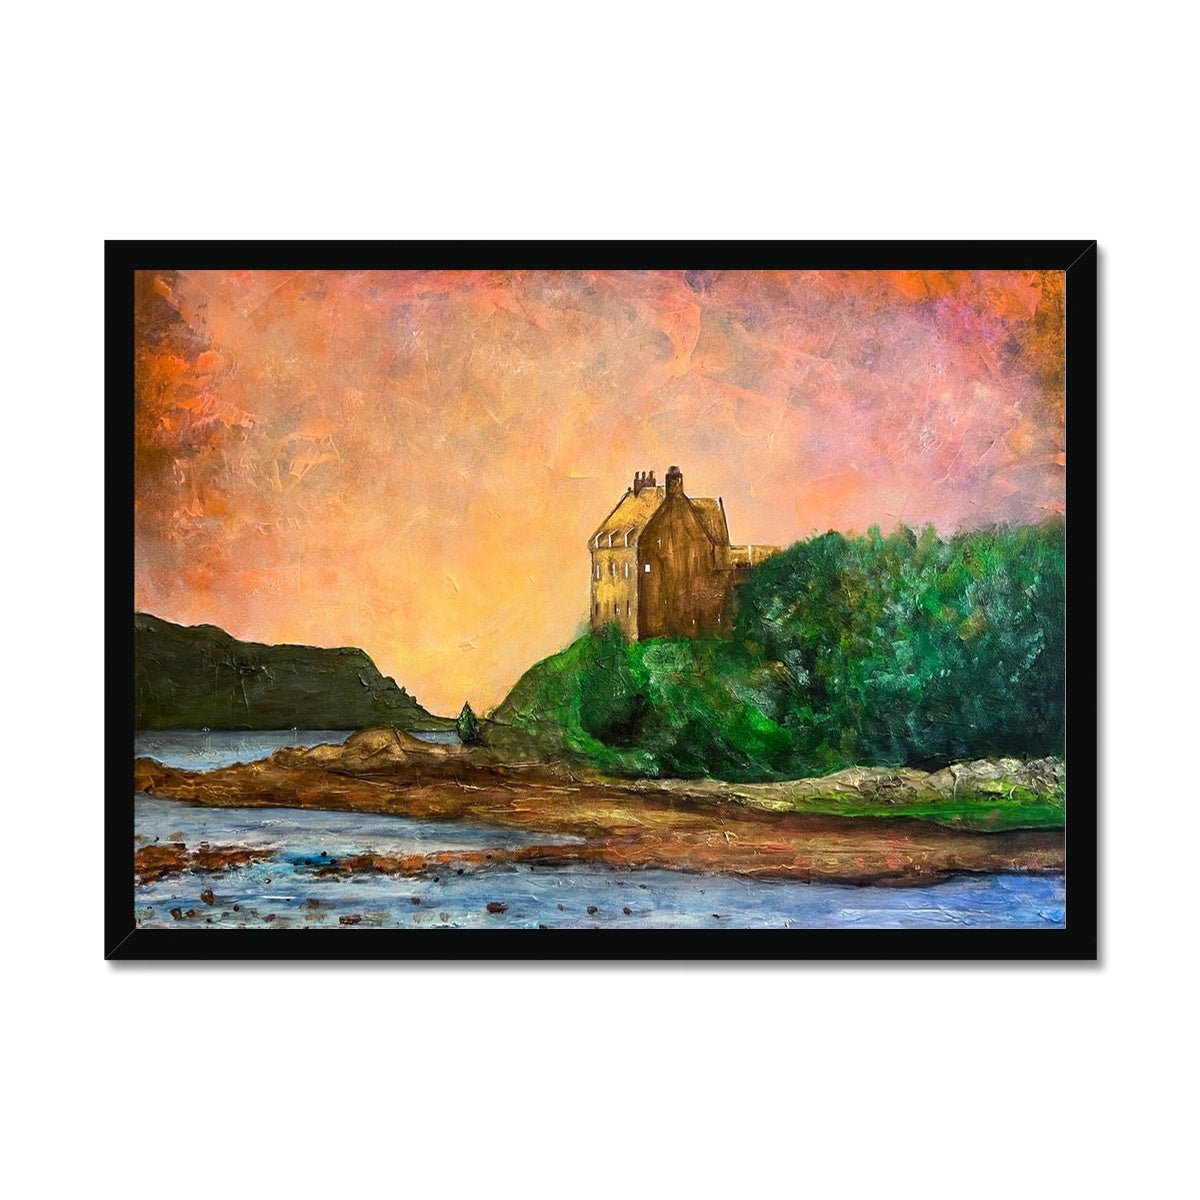 Duntrune Castle Painting | Framed Prints From Scotland-Framed Prints-Scottish Castles Art Gallery-A2 Landscape-Black Frame-Paintings, Prints, Homeware, Art Gifts From Scotland By Scottish Artist Kevin Hunter